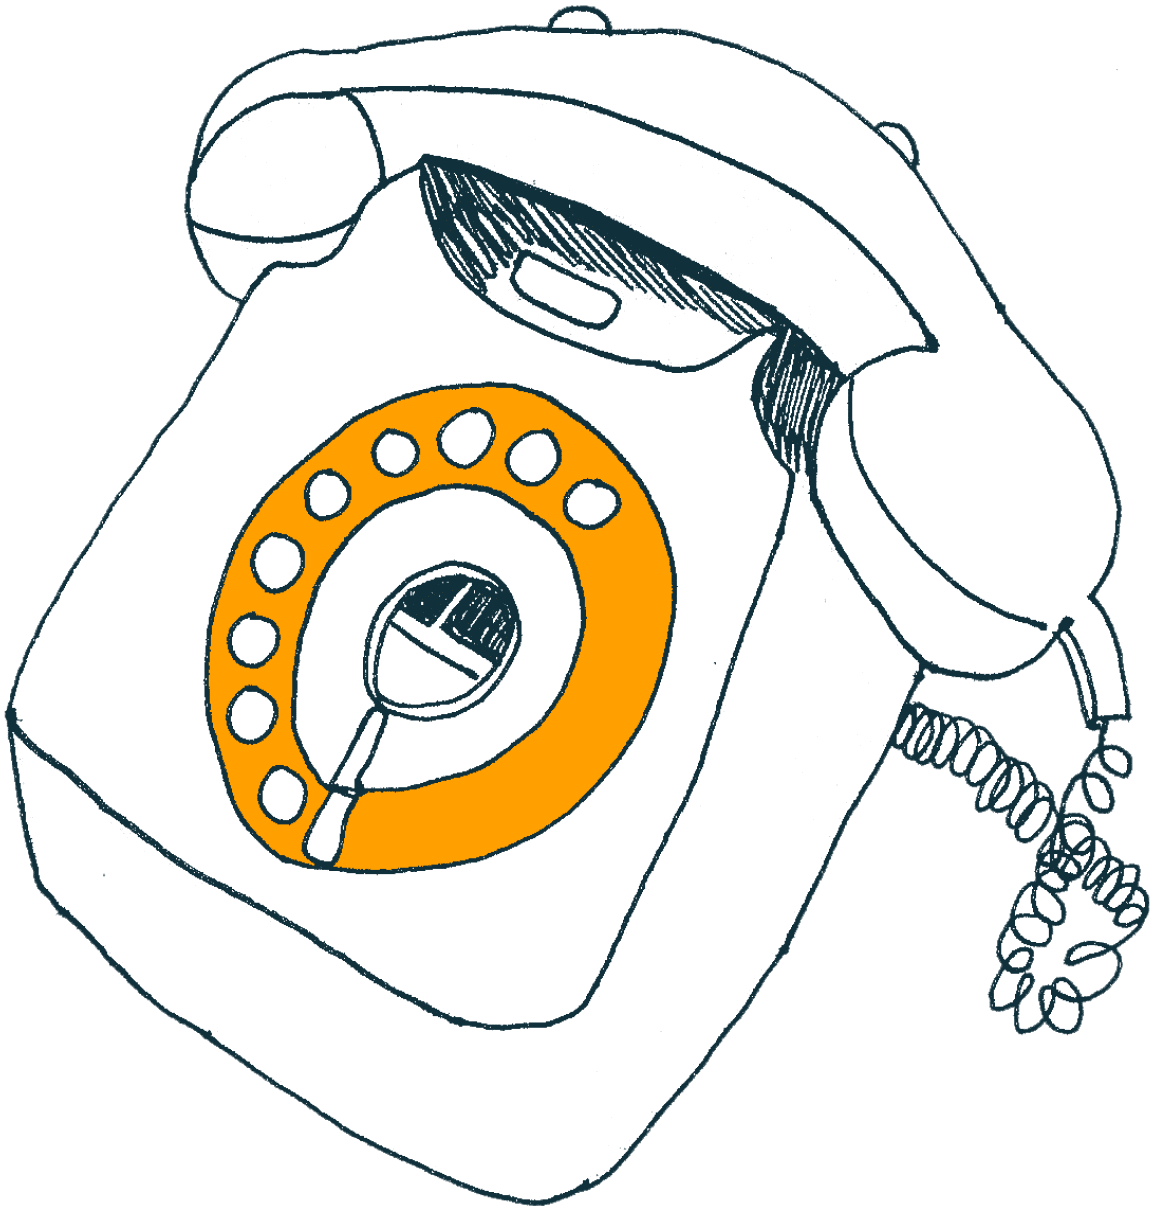 Phone illustration